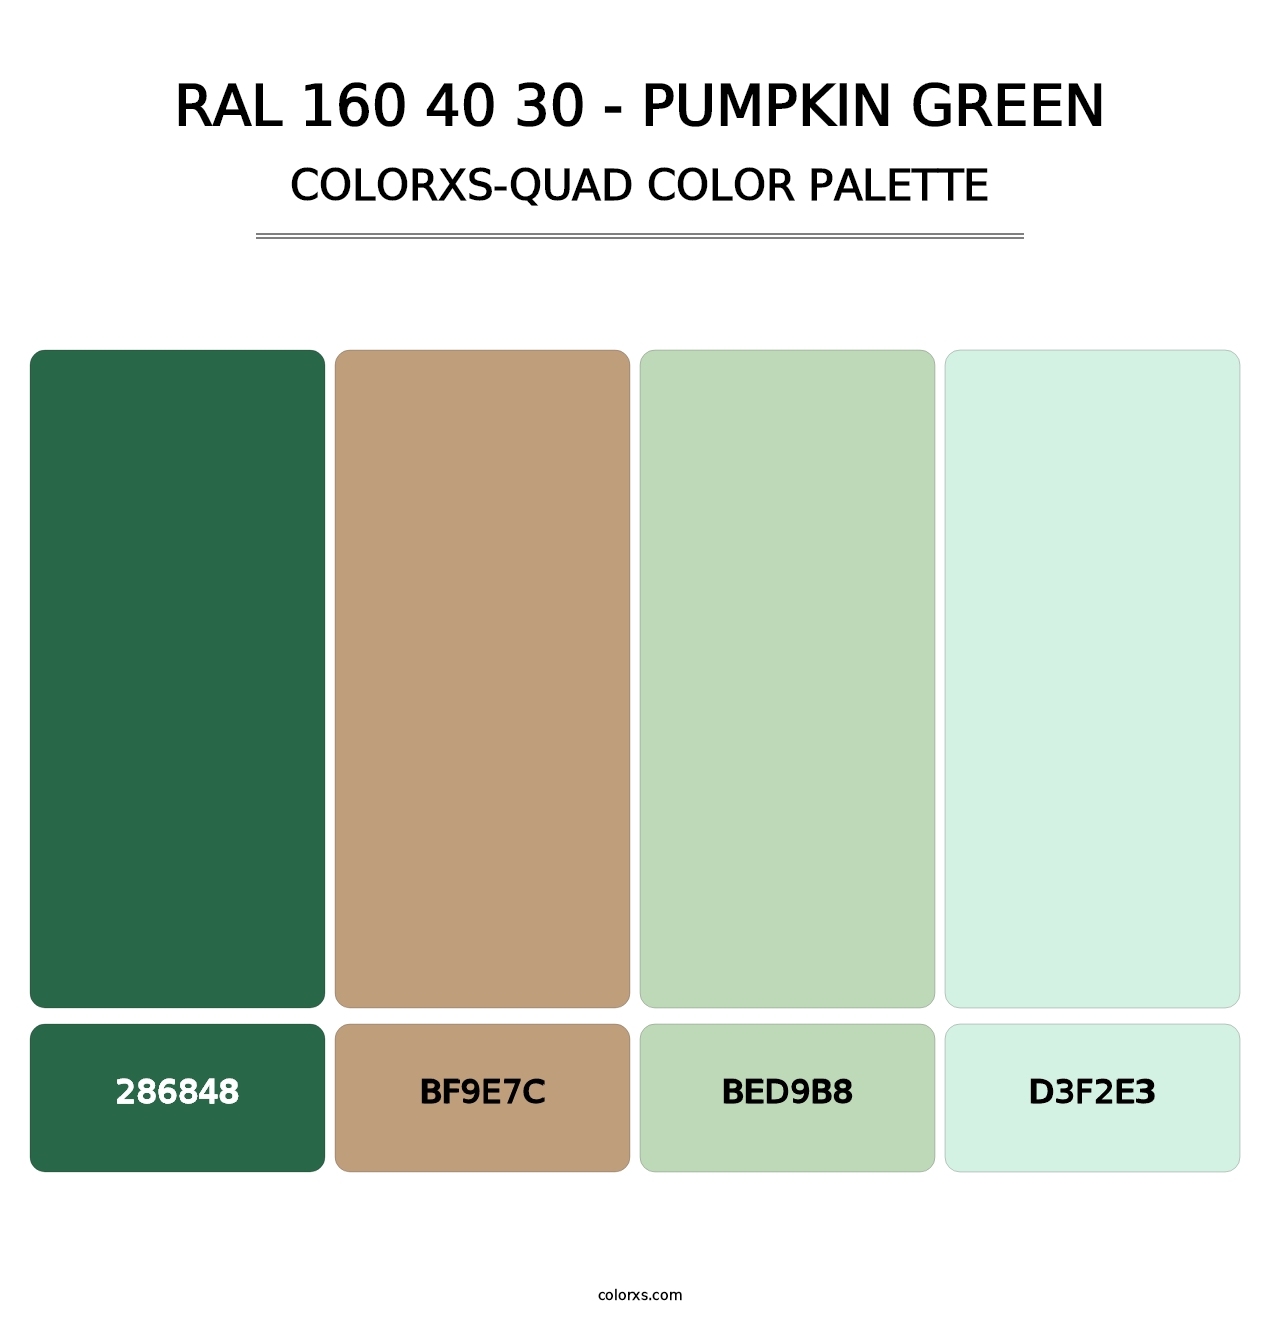 RAL 160 40 30 - Pumpkin Green - Colorxs Quad Palette